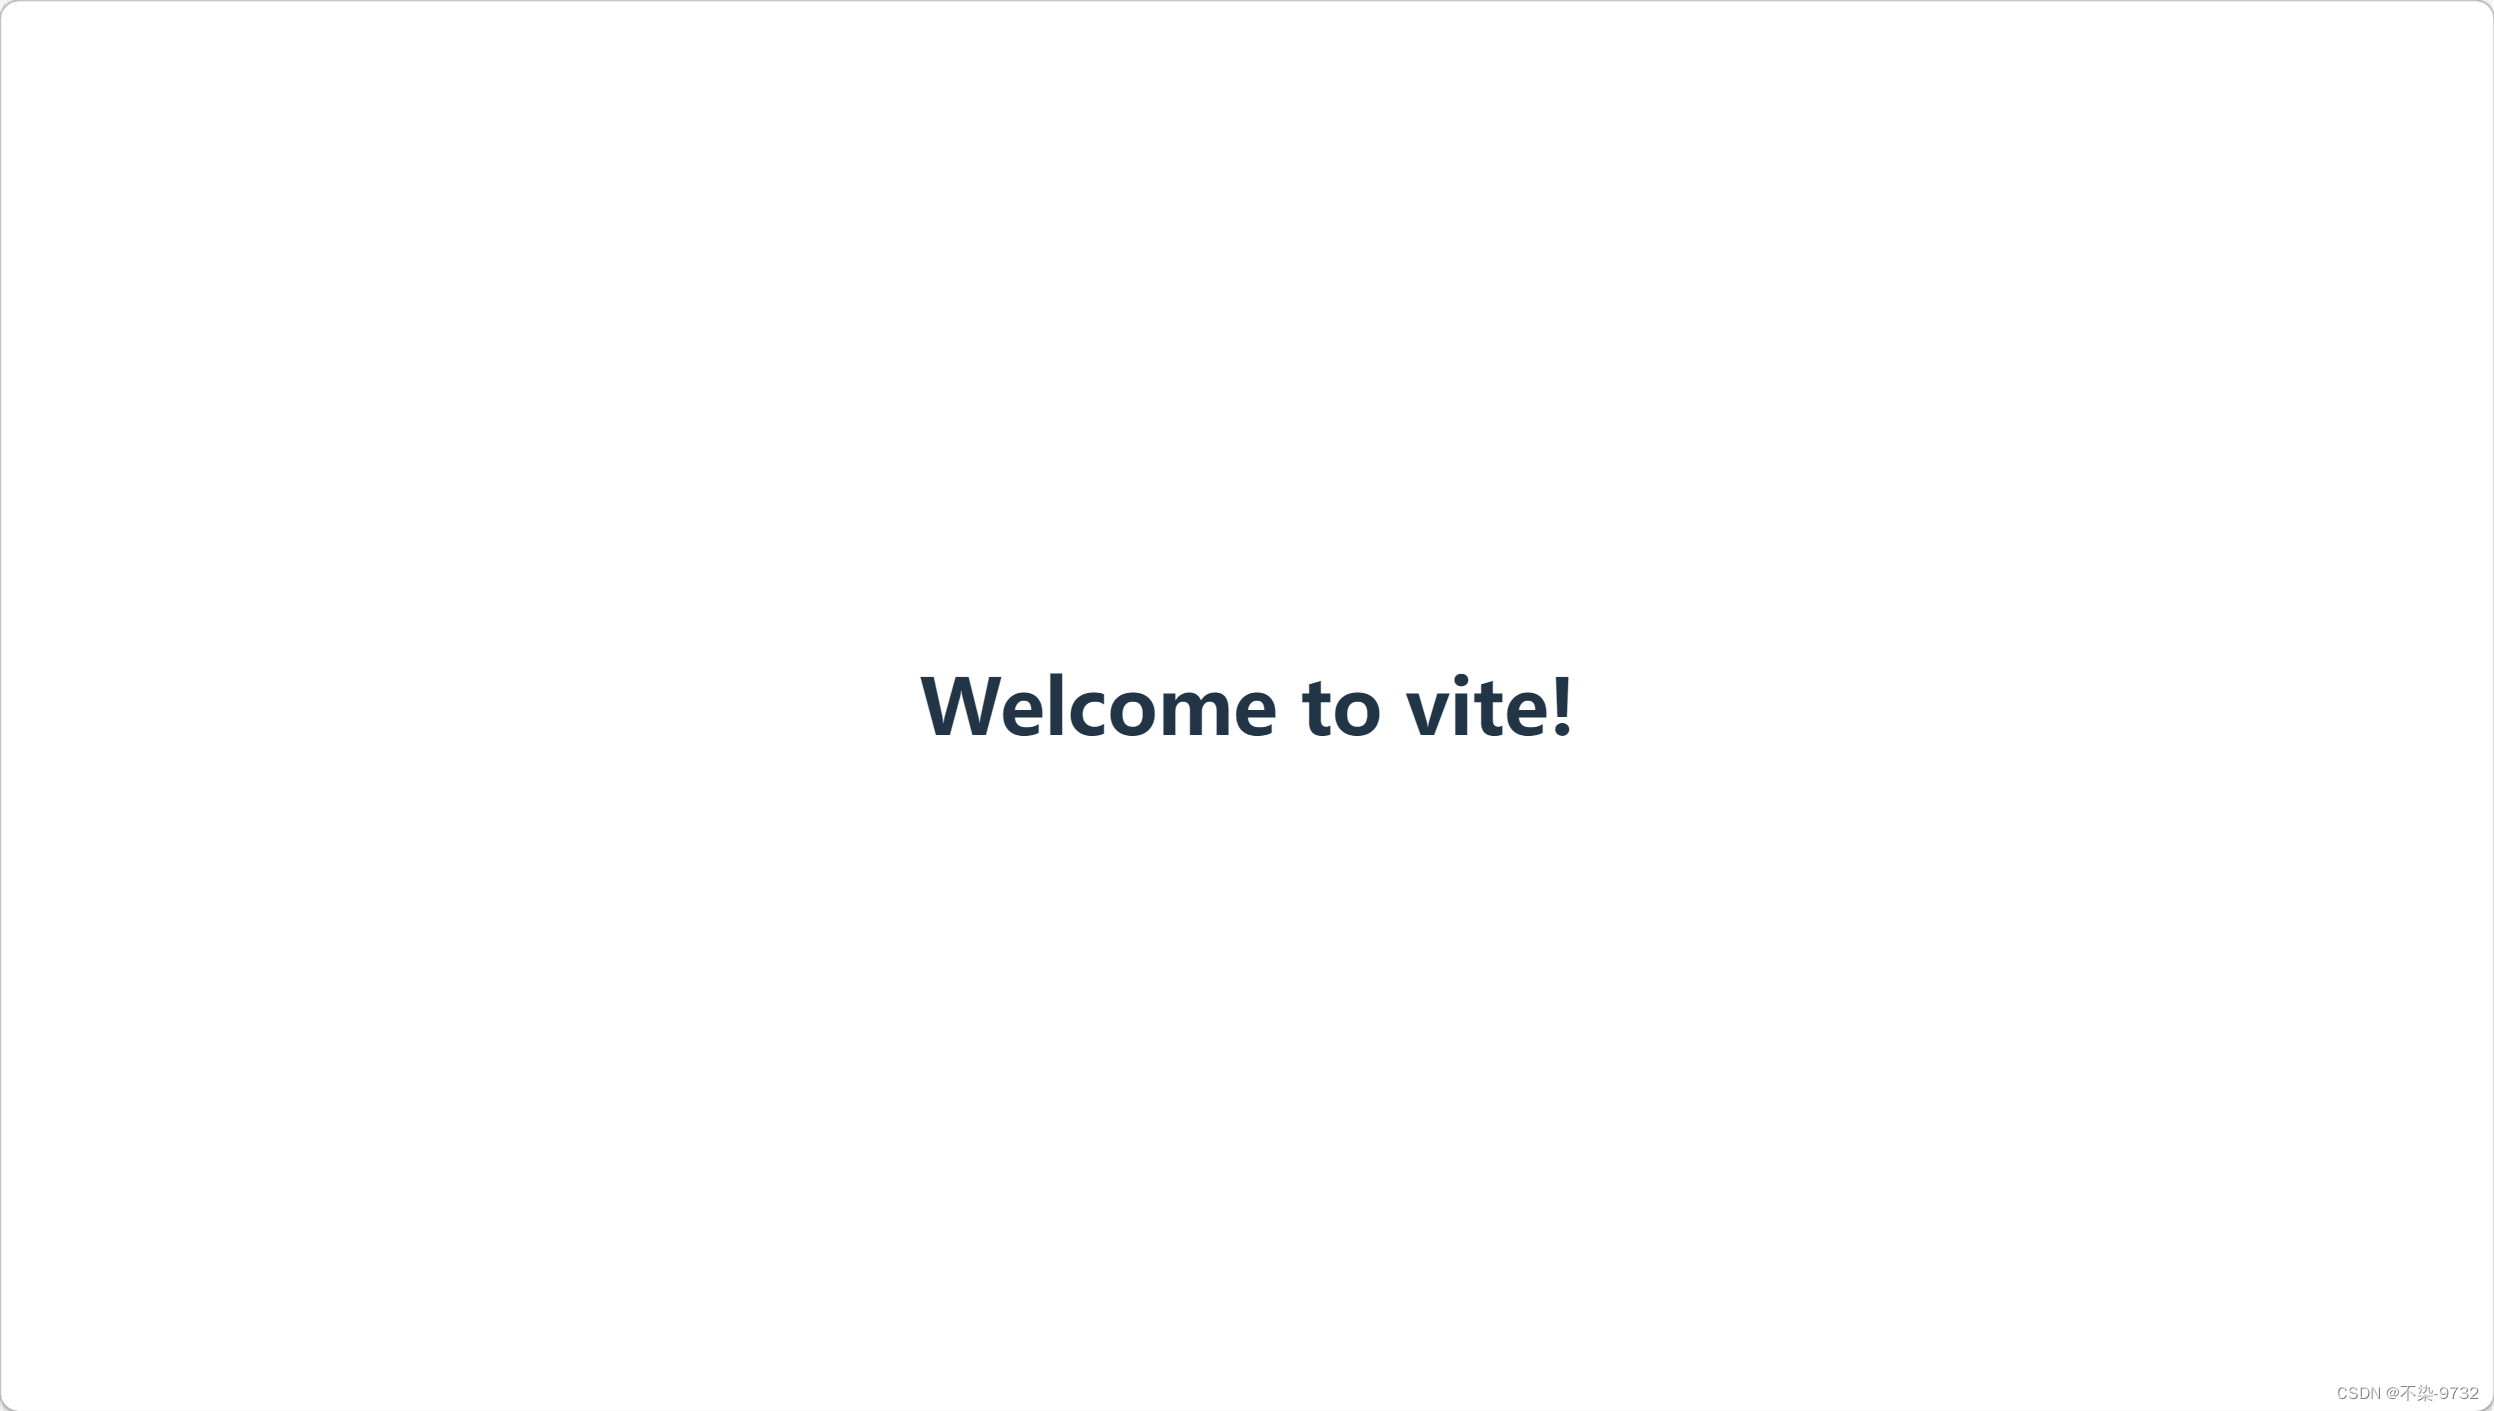 vue3+vite+ts 搭建脚手架01创建vite项目并且在项目中初次使用router